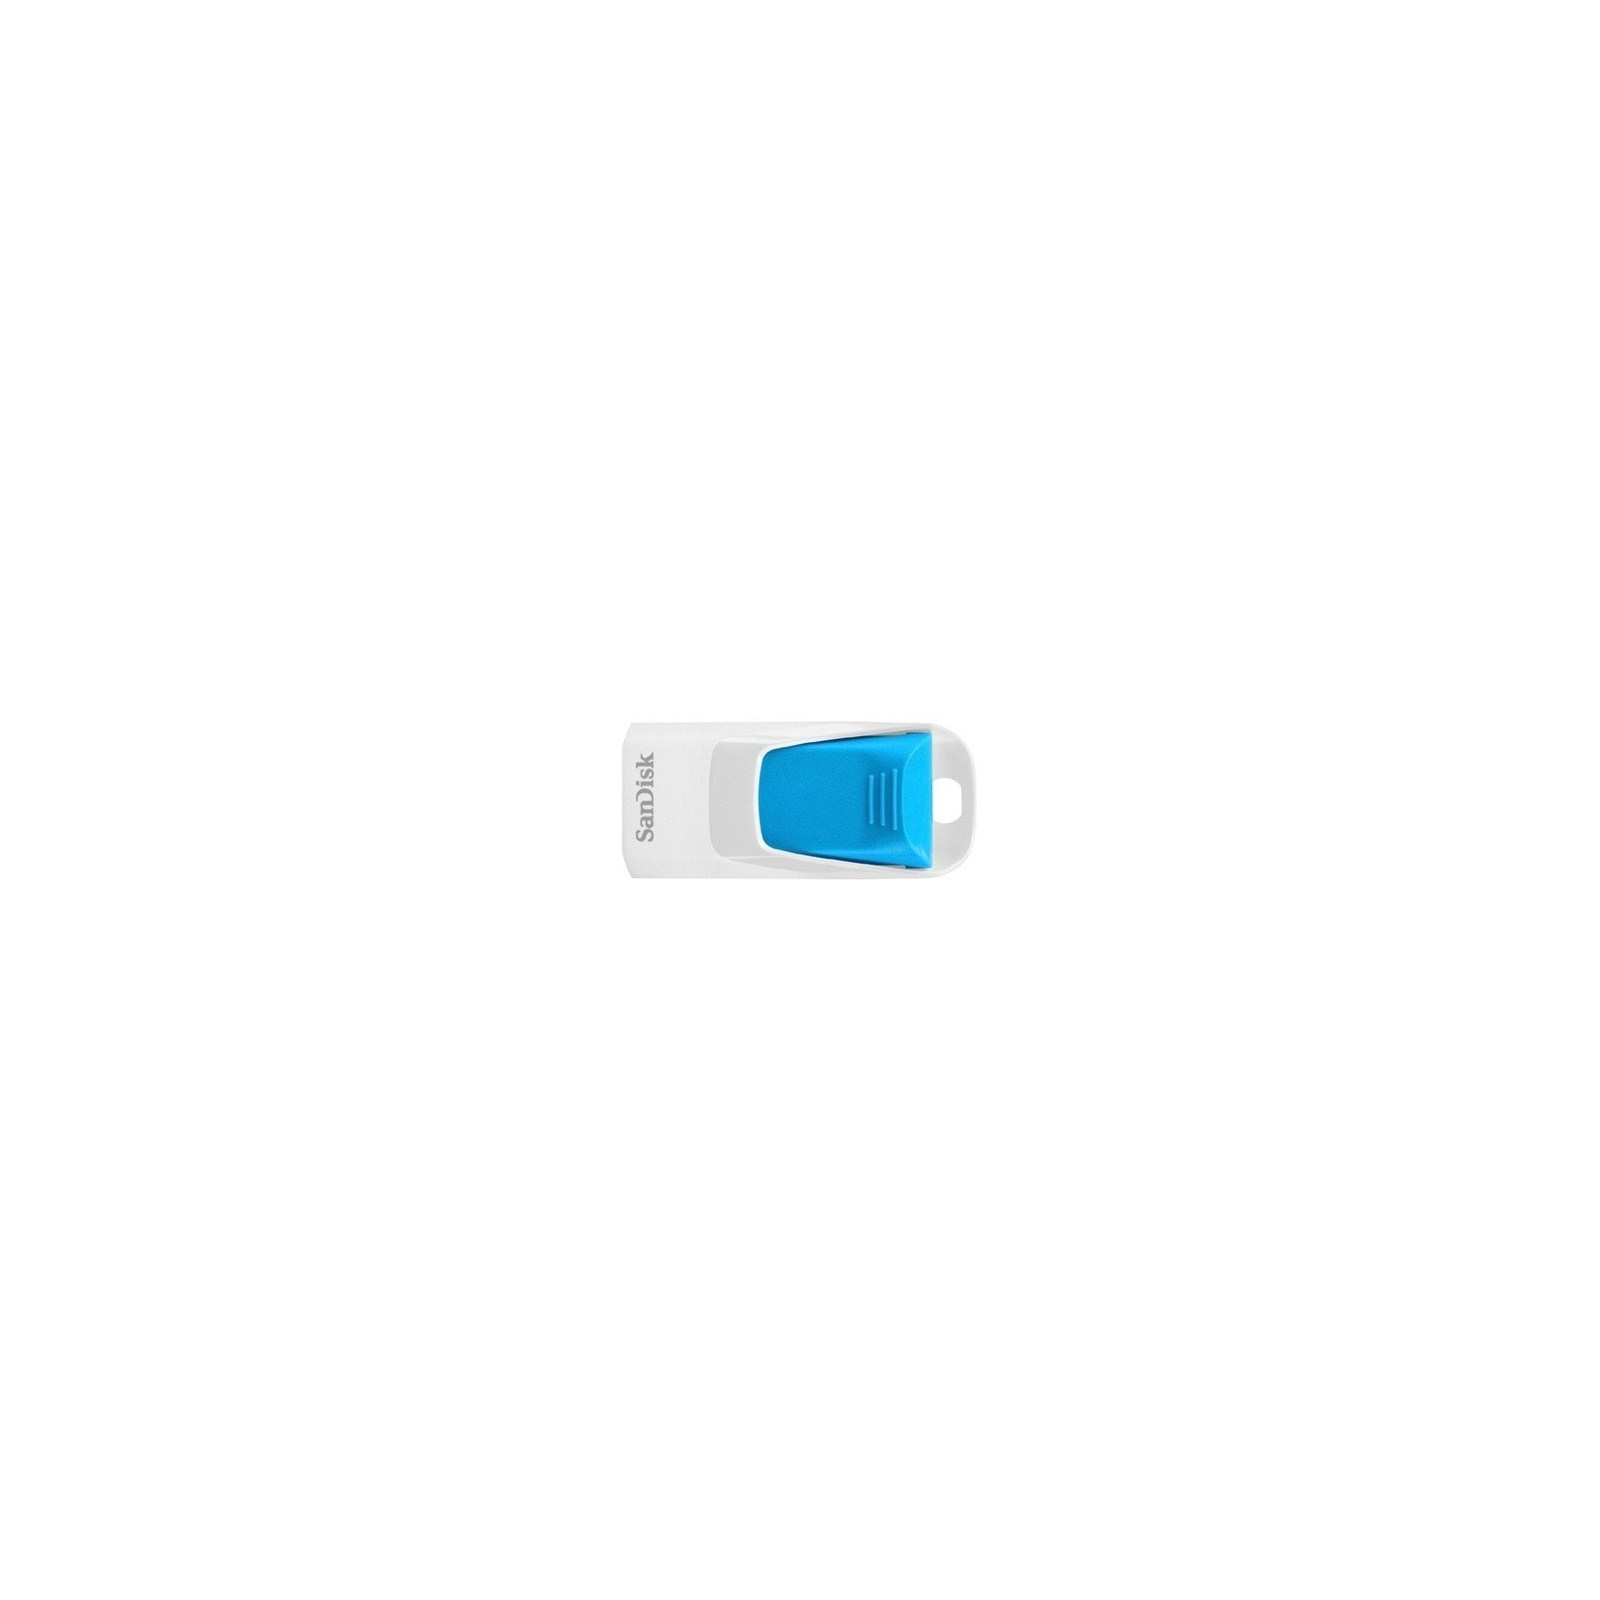 USB флеш накопитель SanDisk 8Gb Cruzer Edge White-Blue (SDCZ51W-008G-B35B)